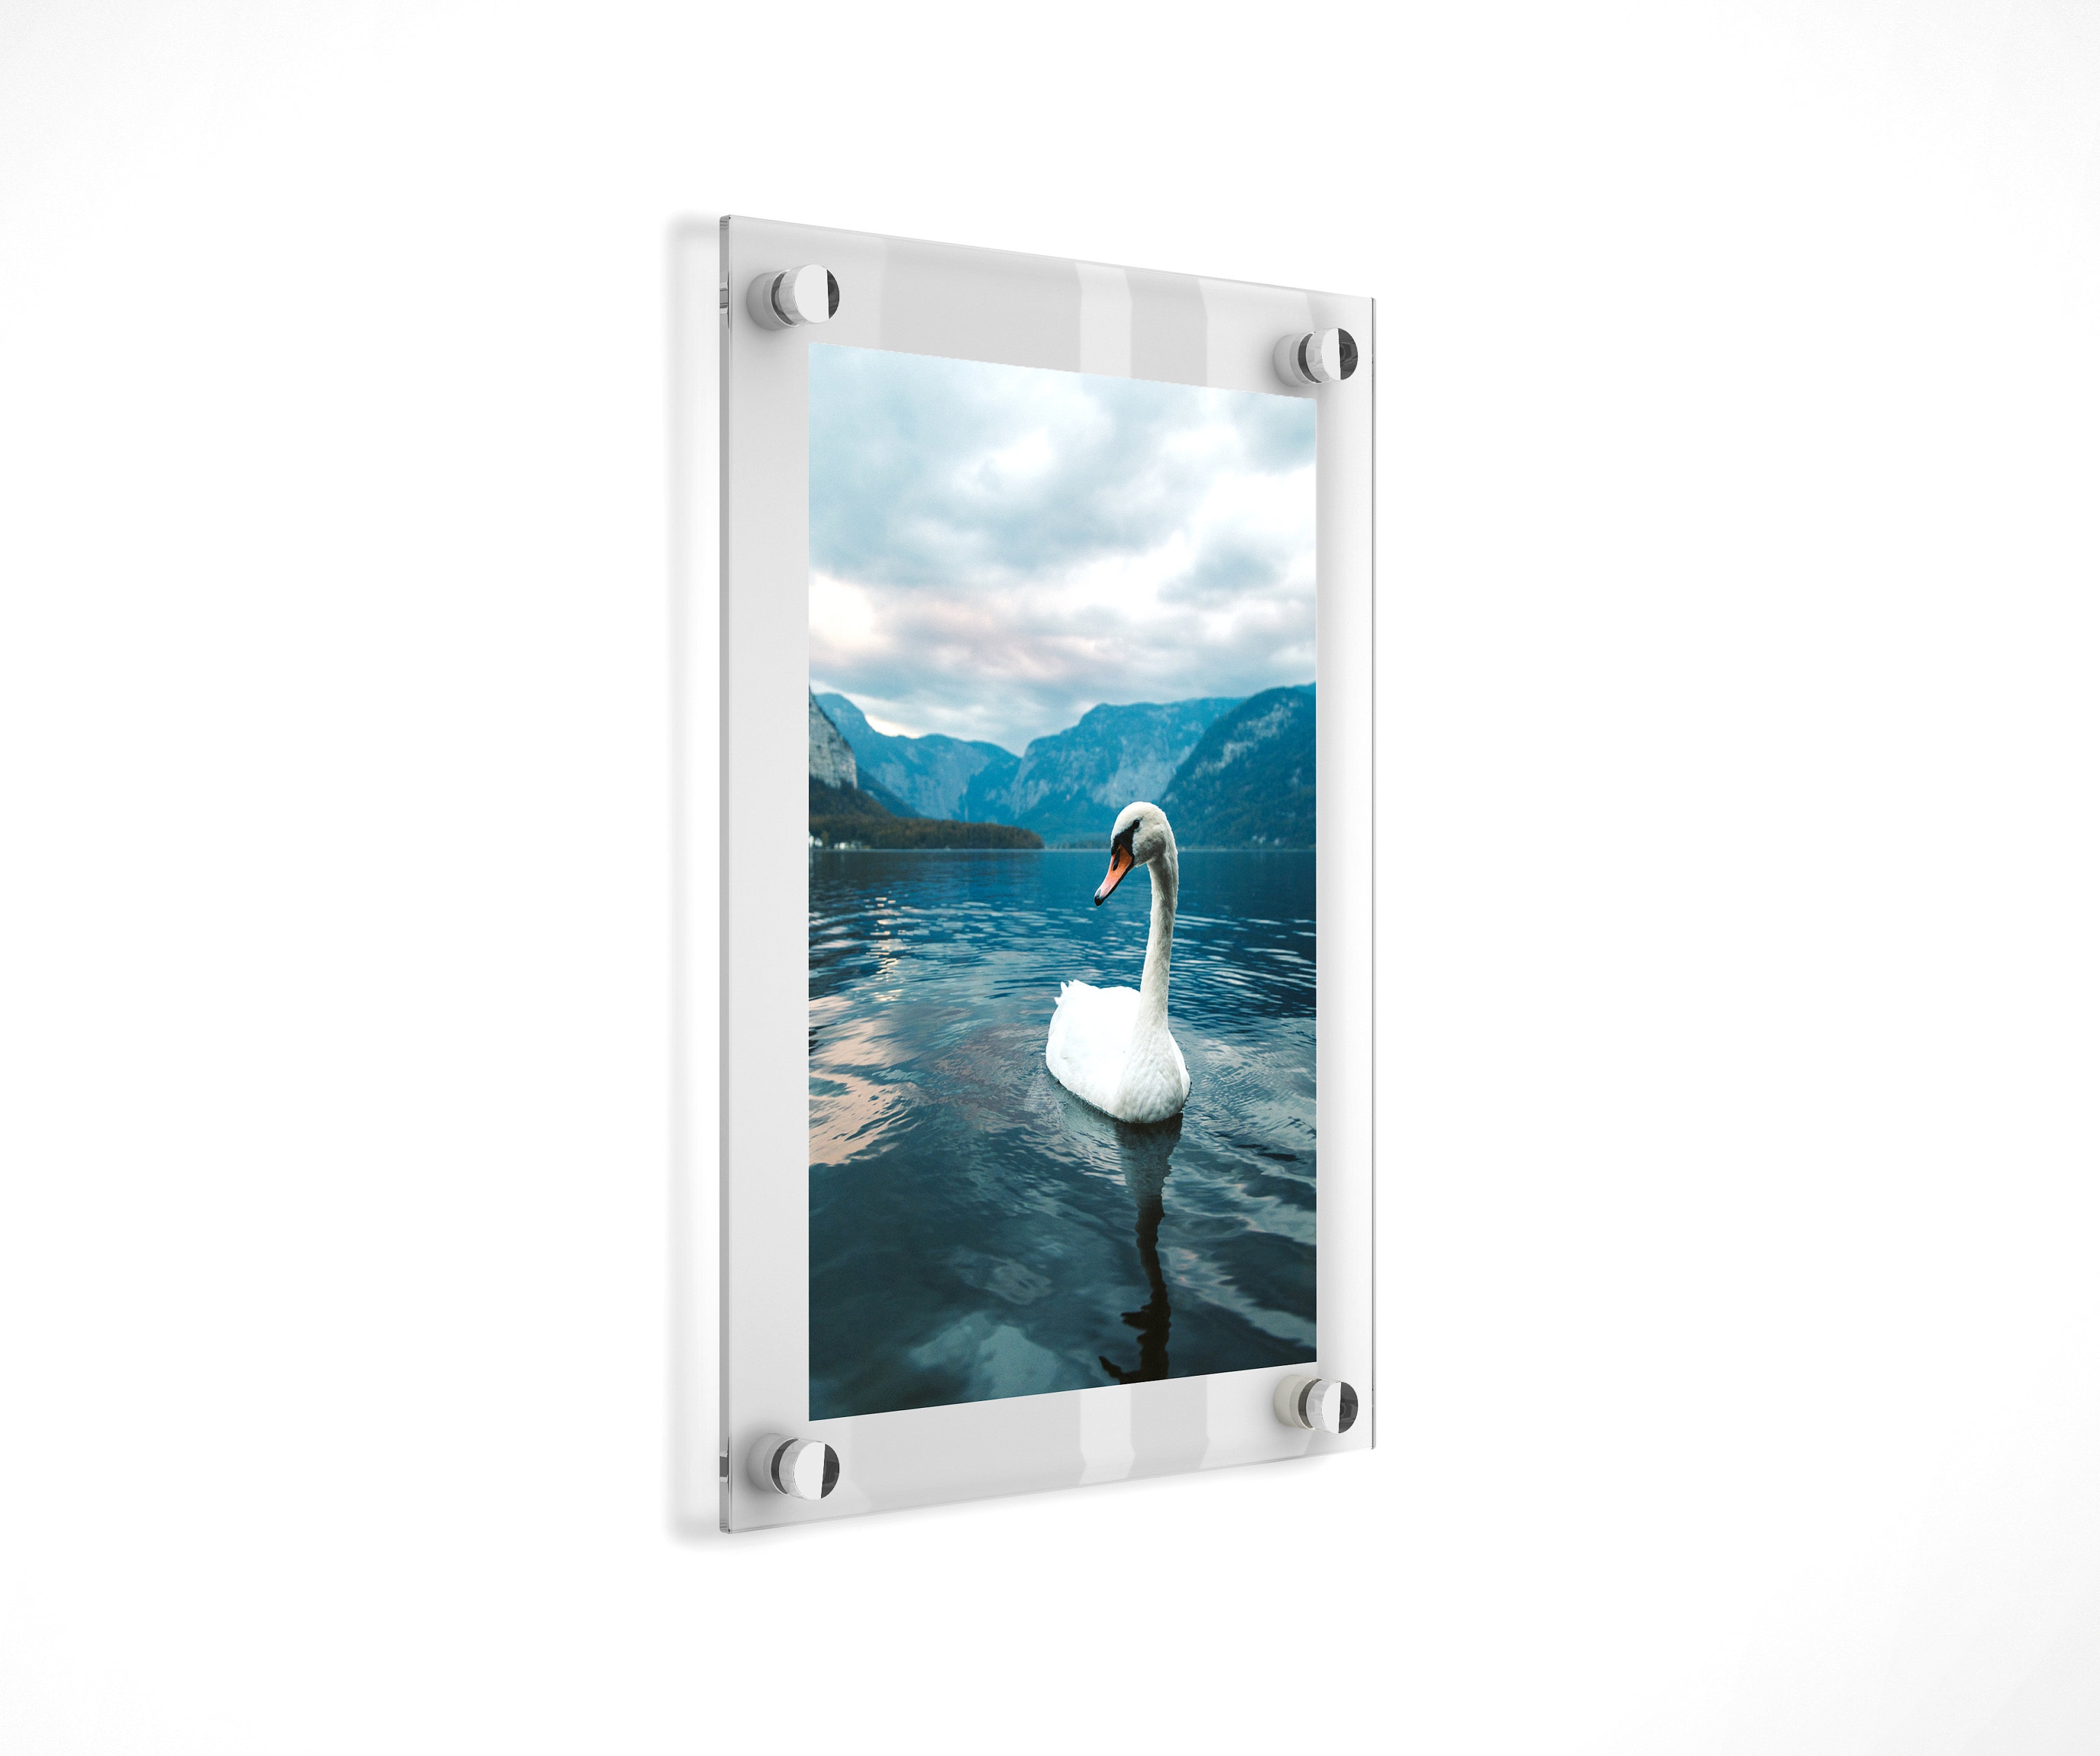 0.06 Clear Plexiglass 8.5x11 3 Pack, Transparent Lucite Acrylic